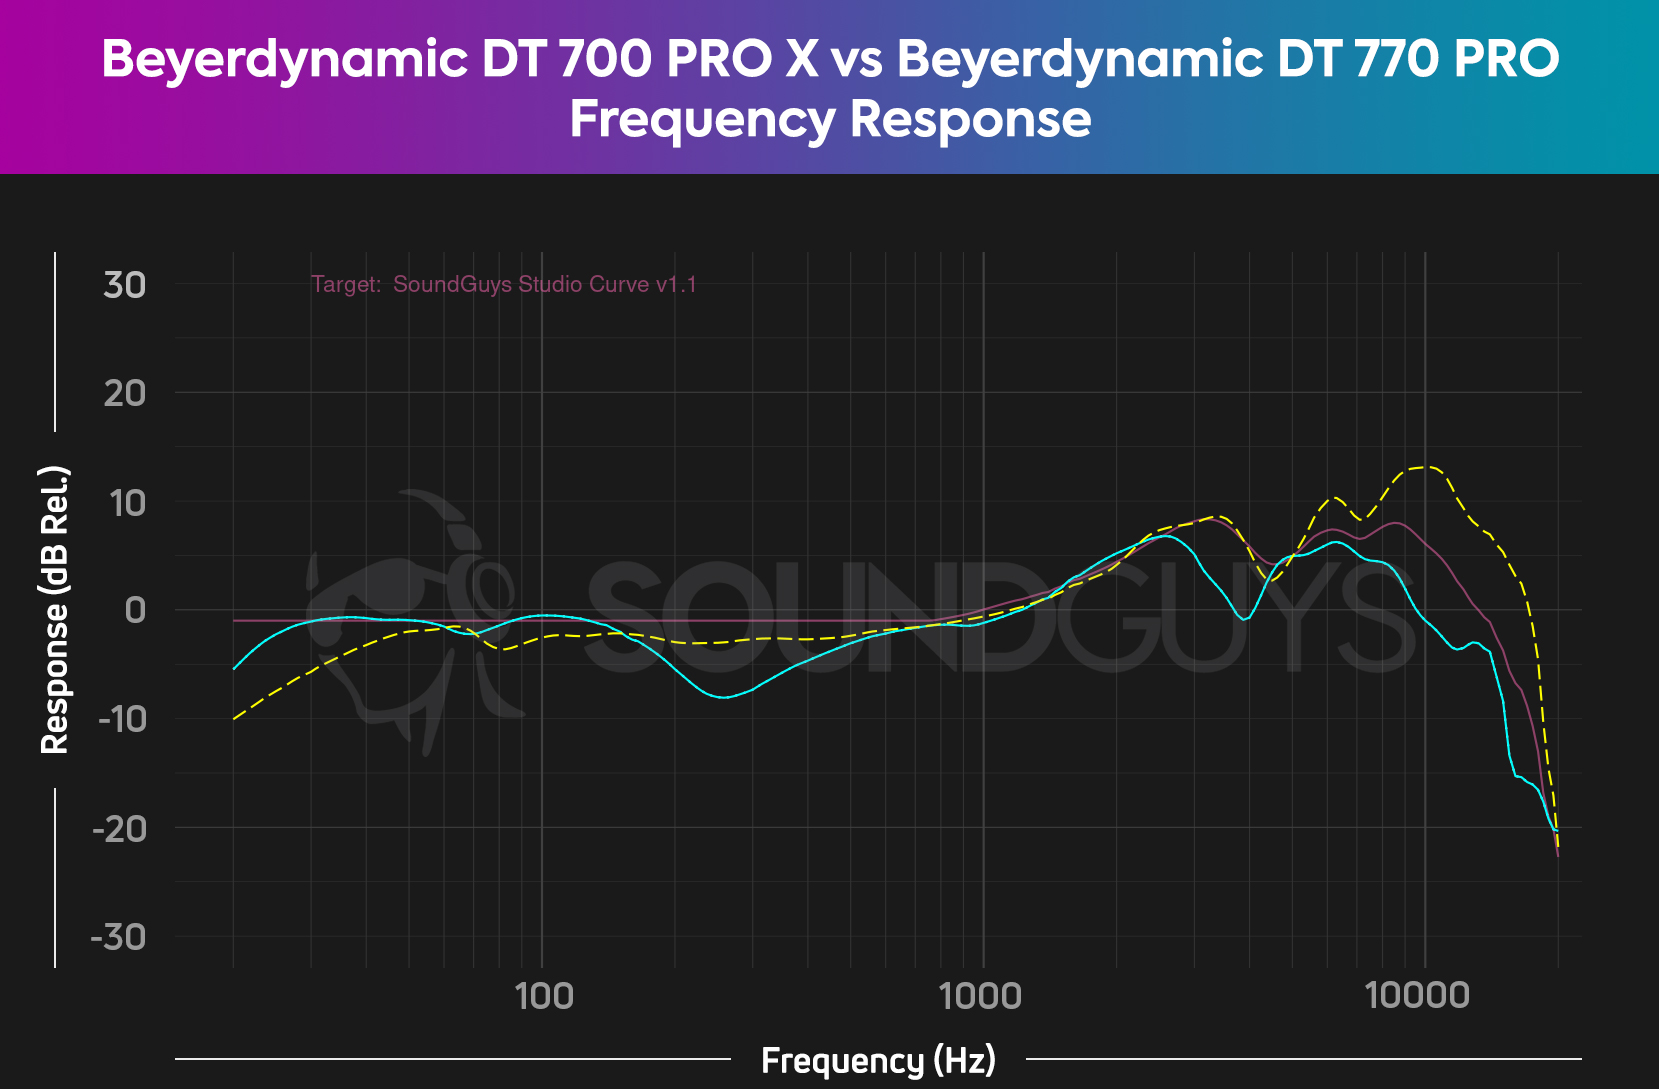 Beyerdynamic DT 770 Pro 80 ohm Closed Back Studio Headphones+